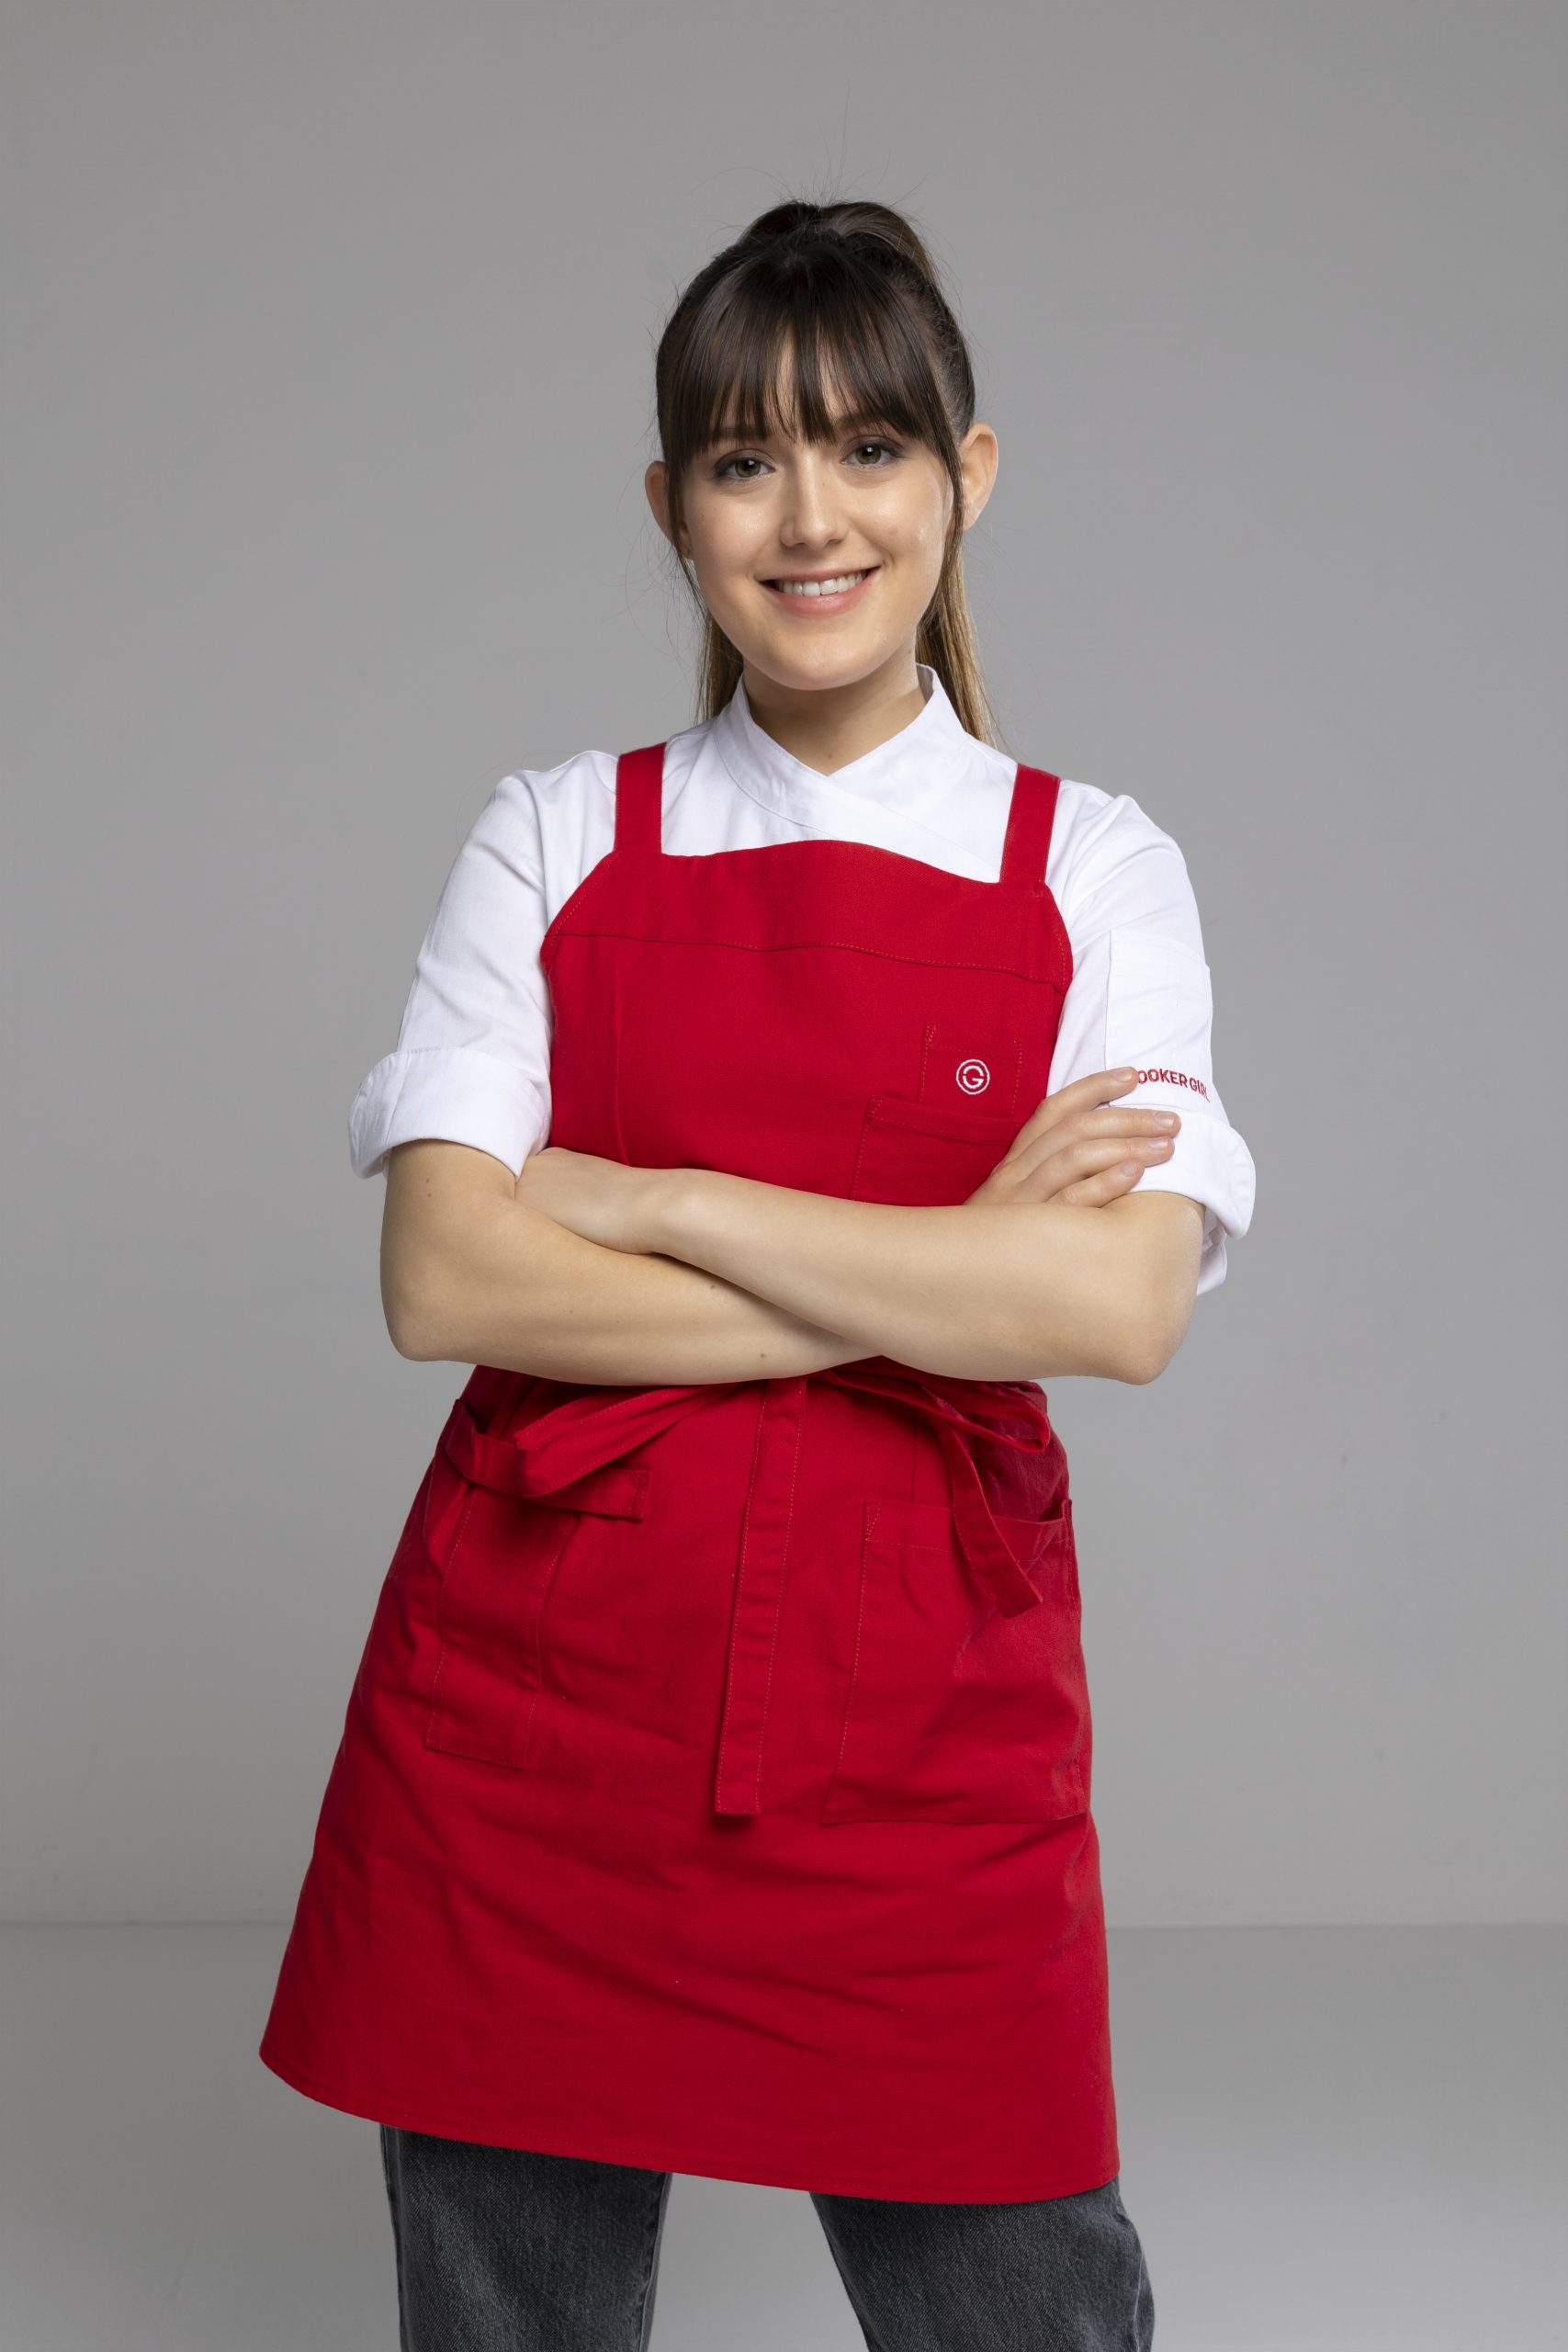 Aurora Cavallo, Cooker Girl all'Influencer Marketing 2023 